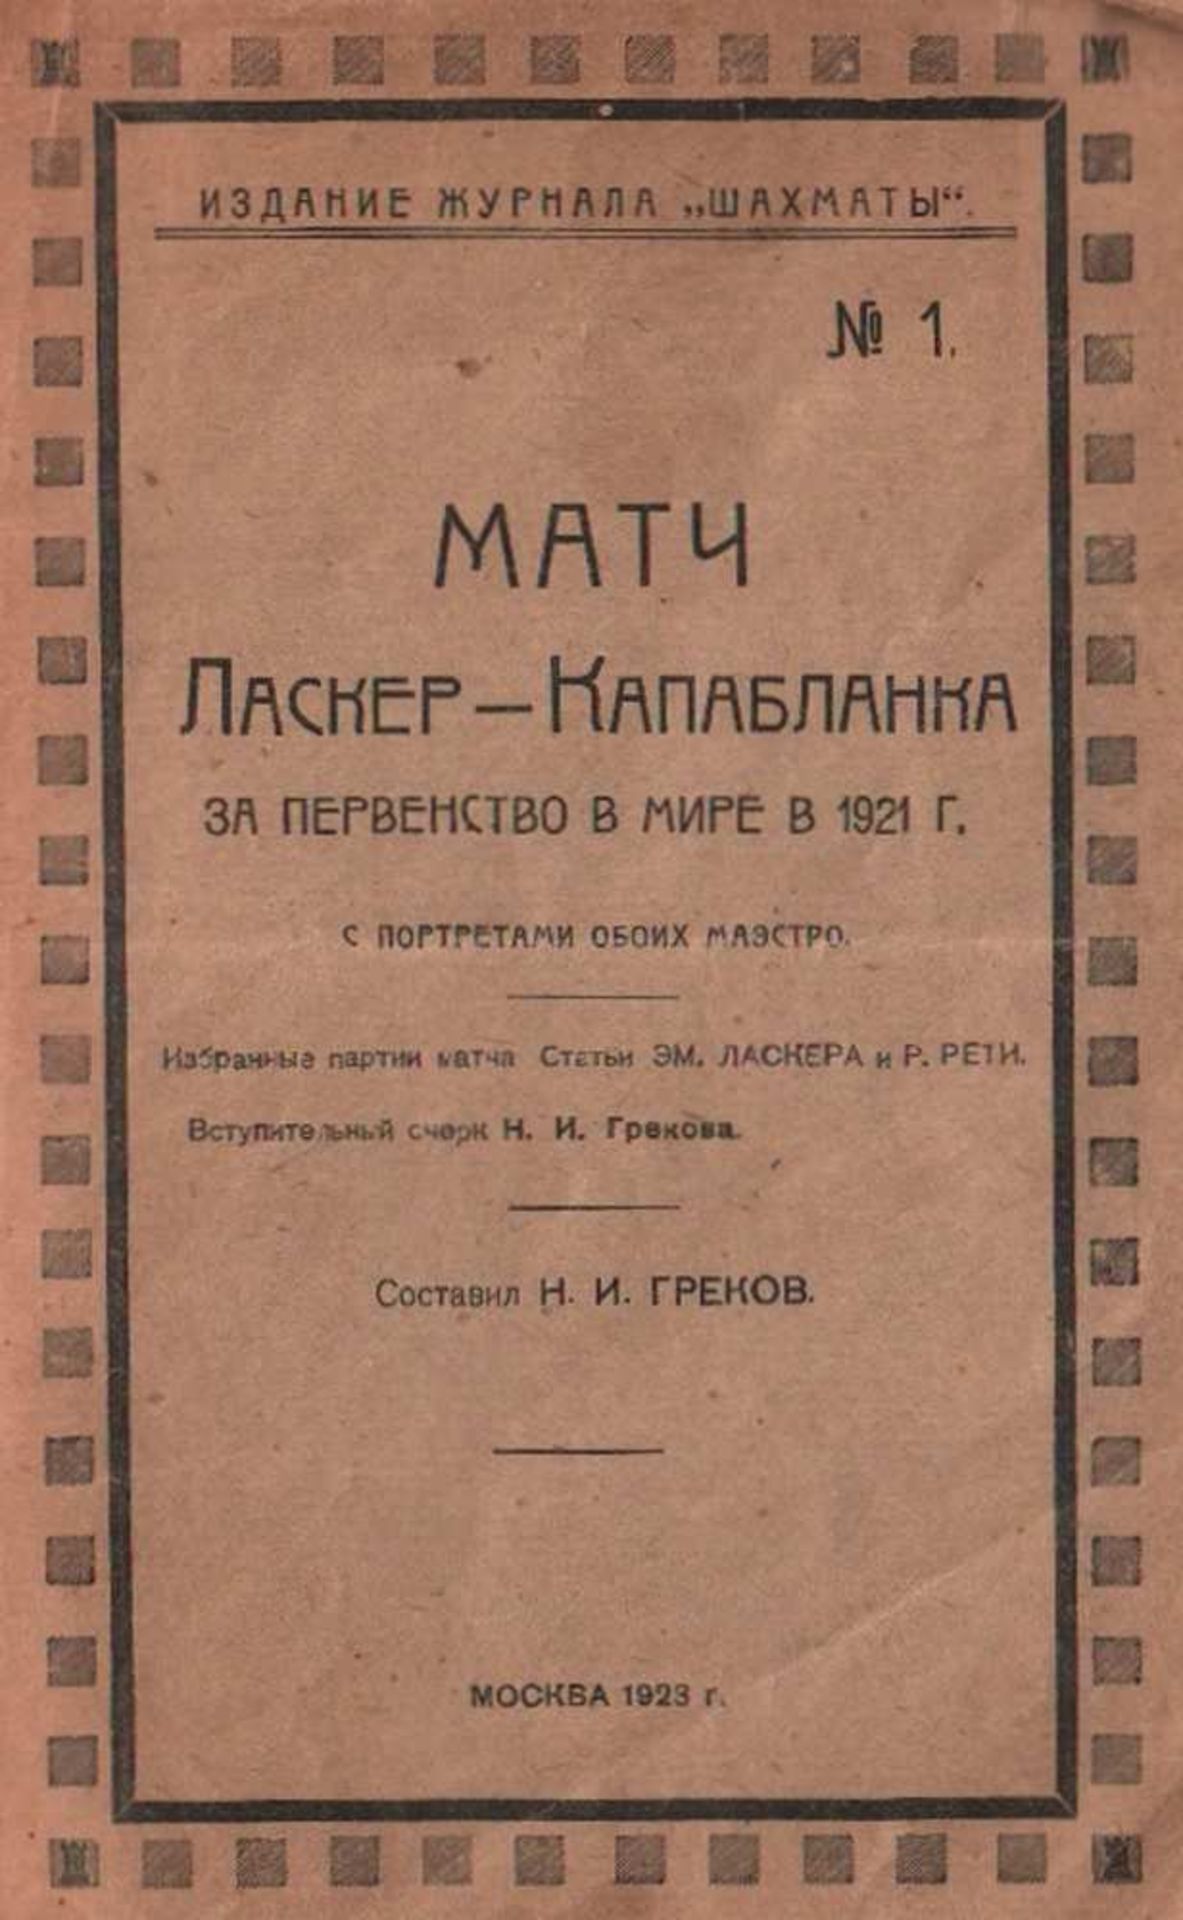 Lasker - Capablanca. Grekow, N. I. (Hrsg.) Match Lasker - Kapablanka sa perwenstwo w mire w 1921